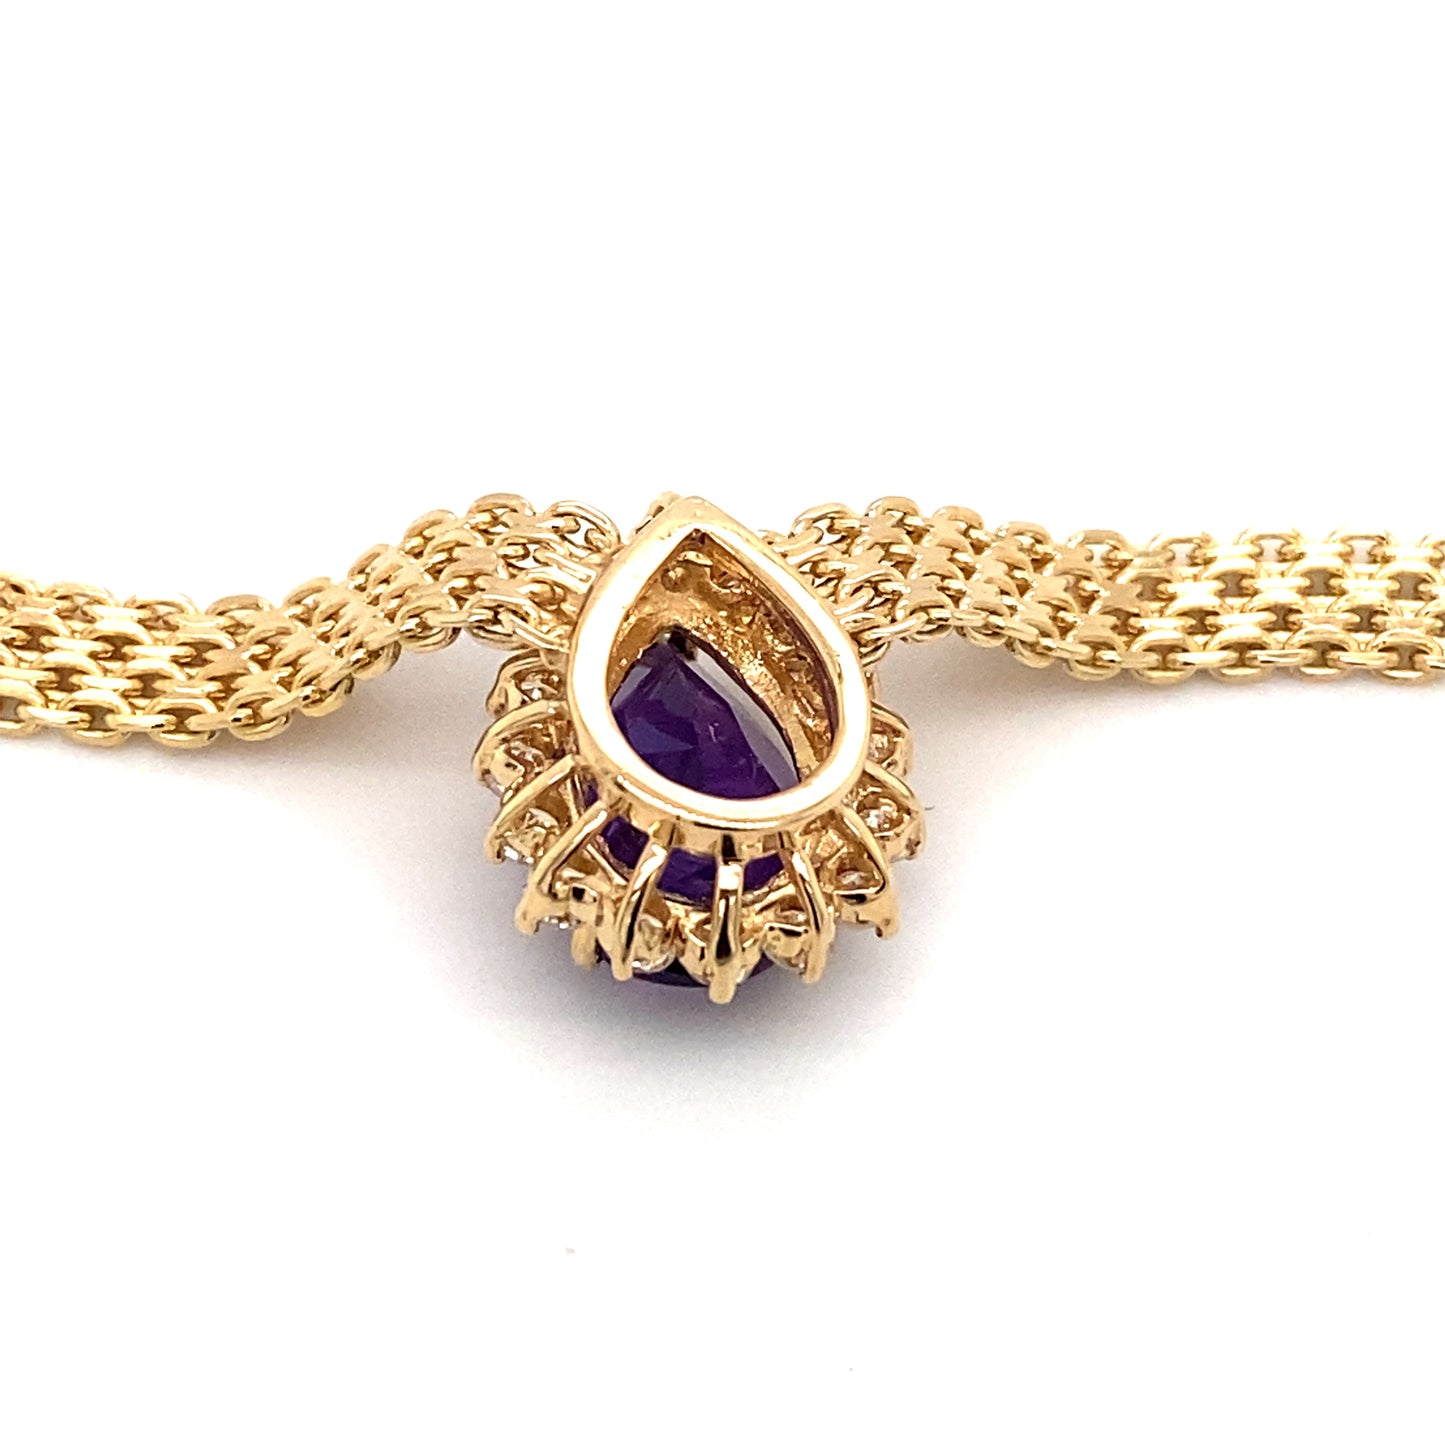 Circa 1950 4.0Ct Amethyst and Diamond Halo Necklace in 14 Karat Gold